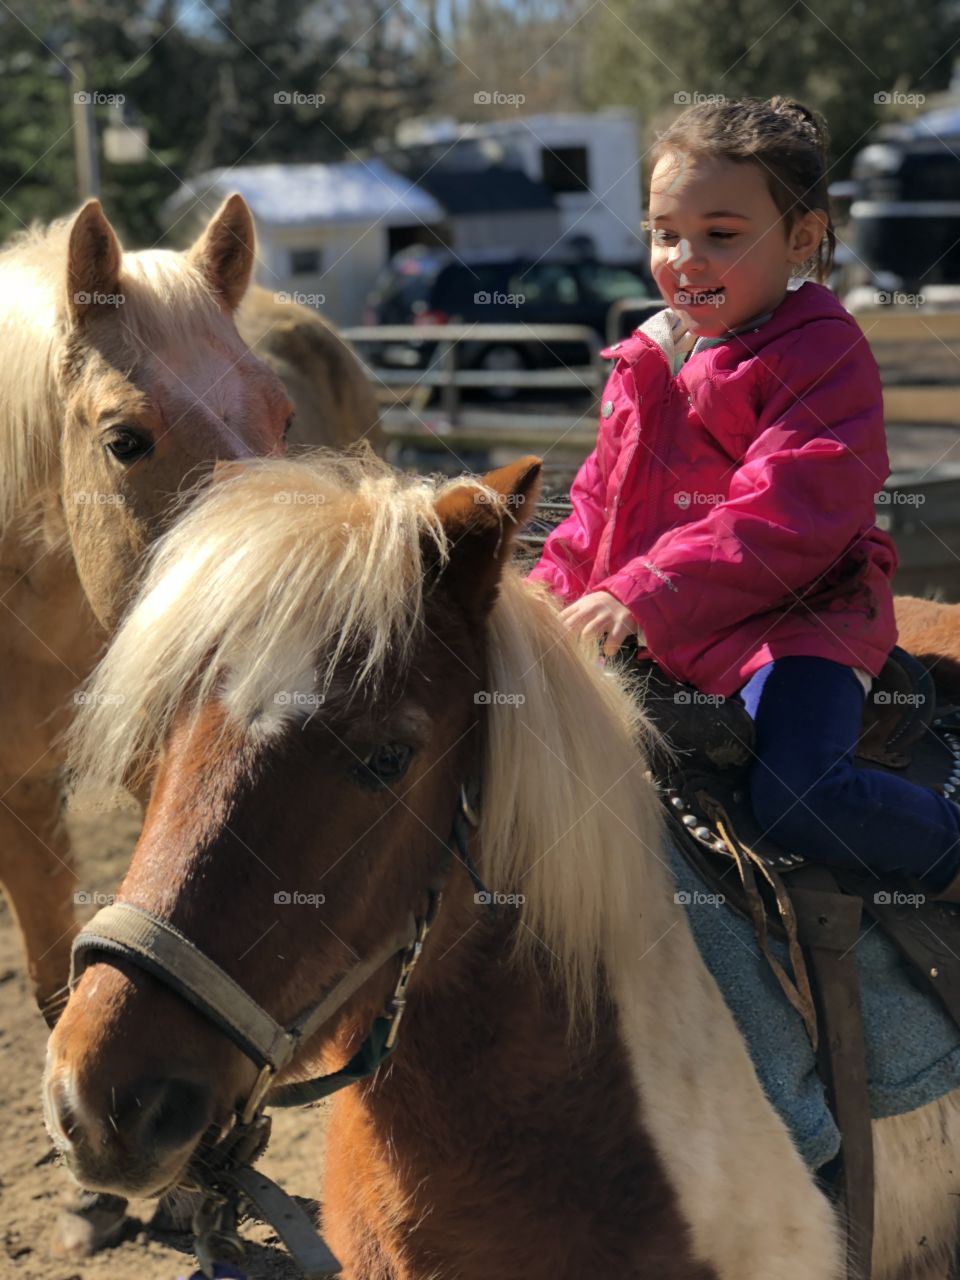 Riding her pony